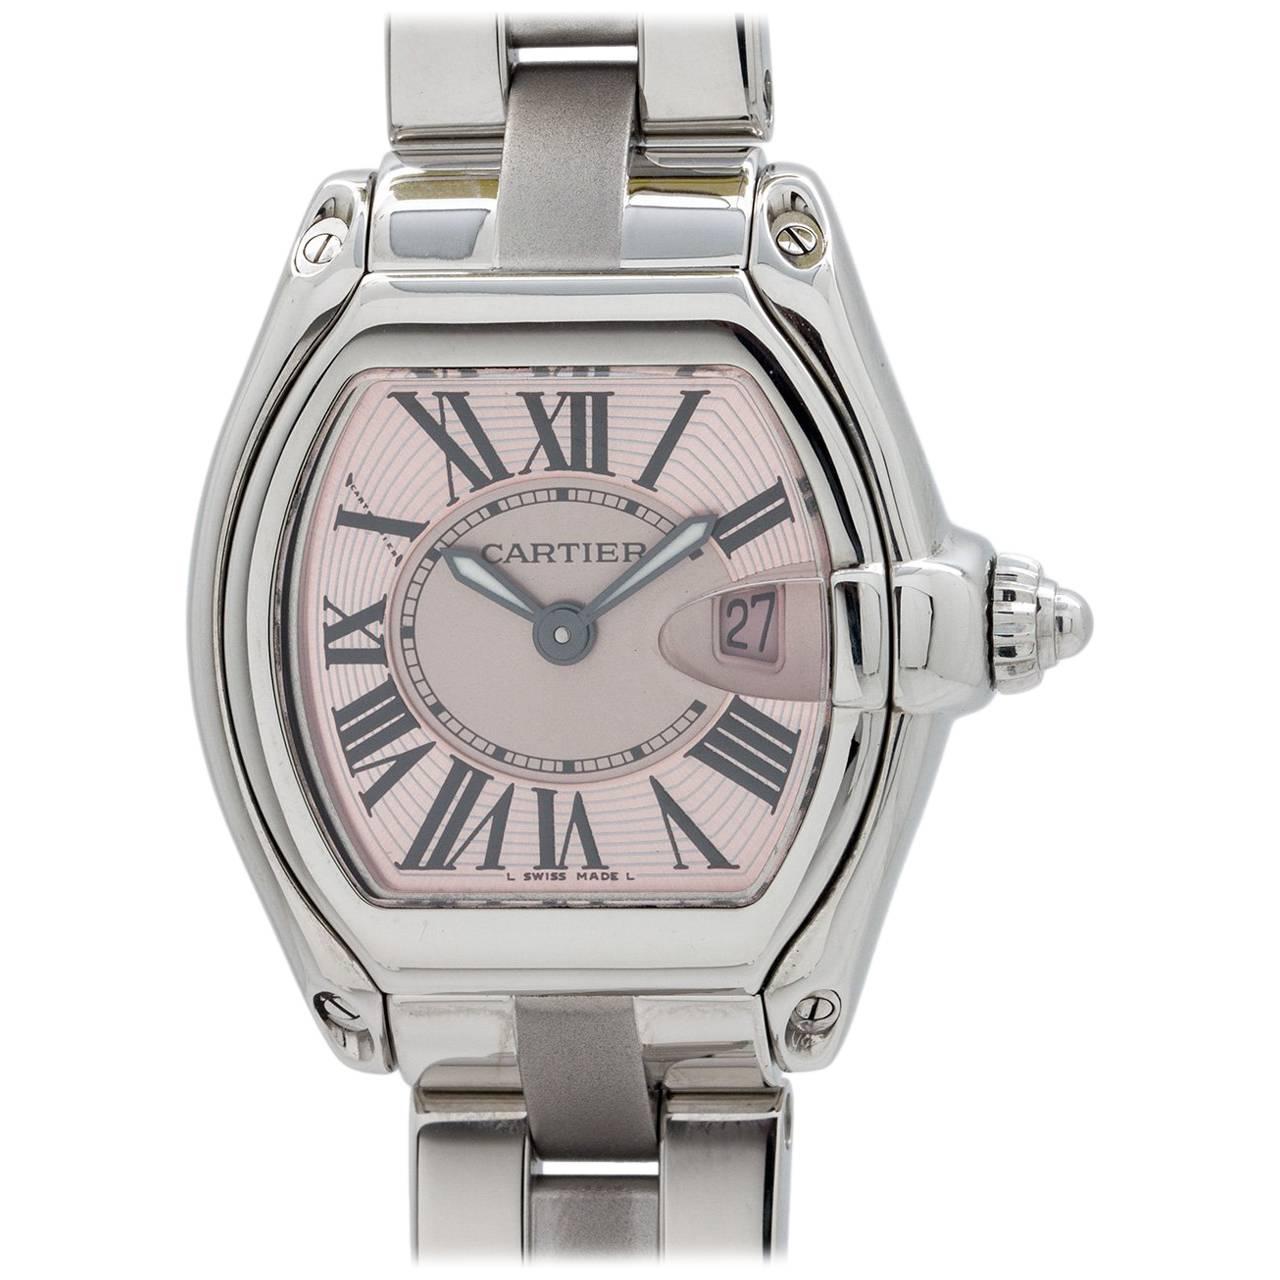 Cartier Stainless steel Lady Roadster ltd ed Breast Cancer quartz wristwatch